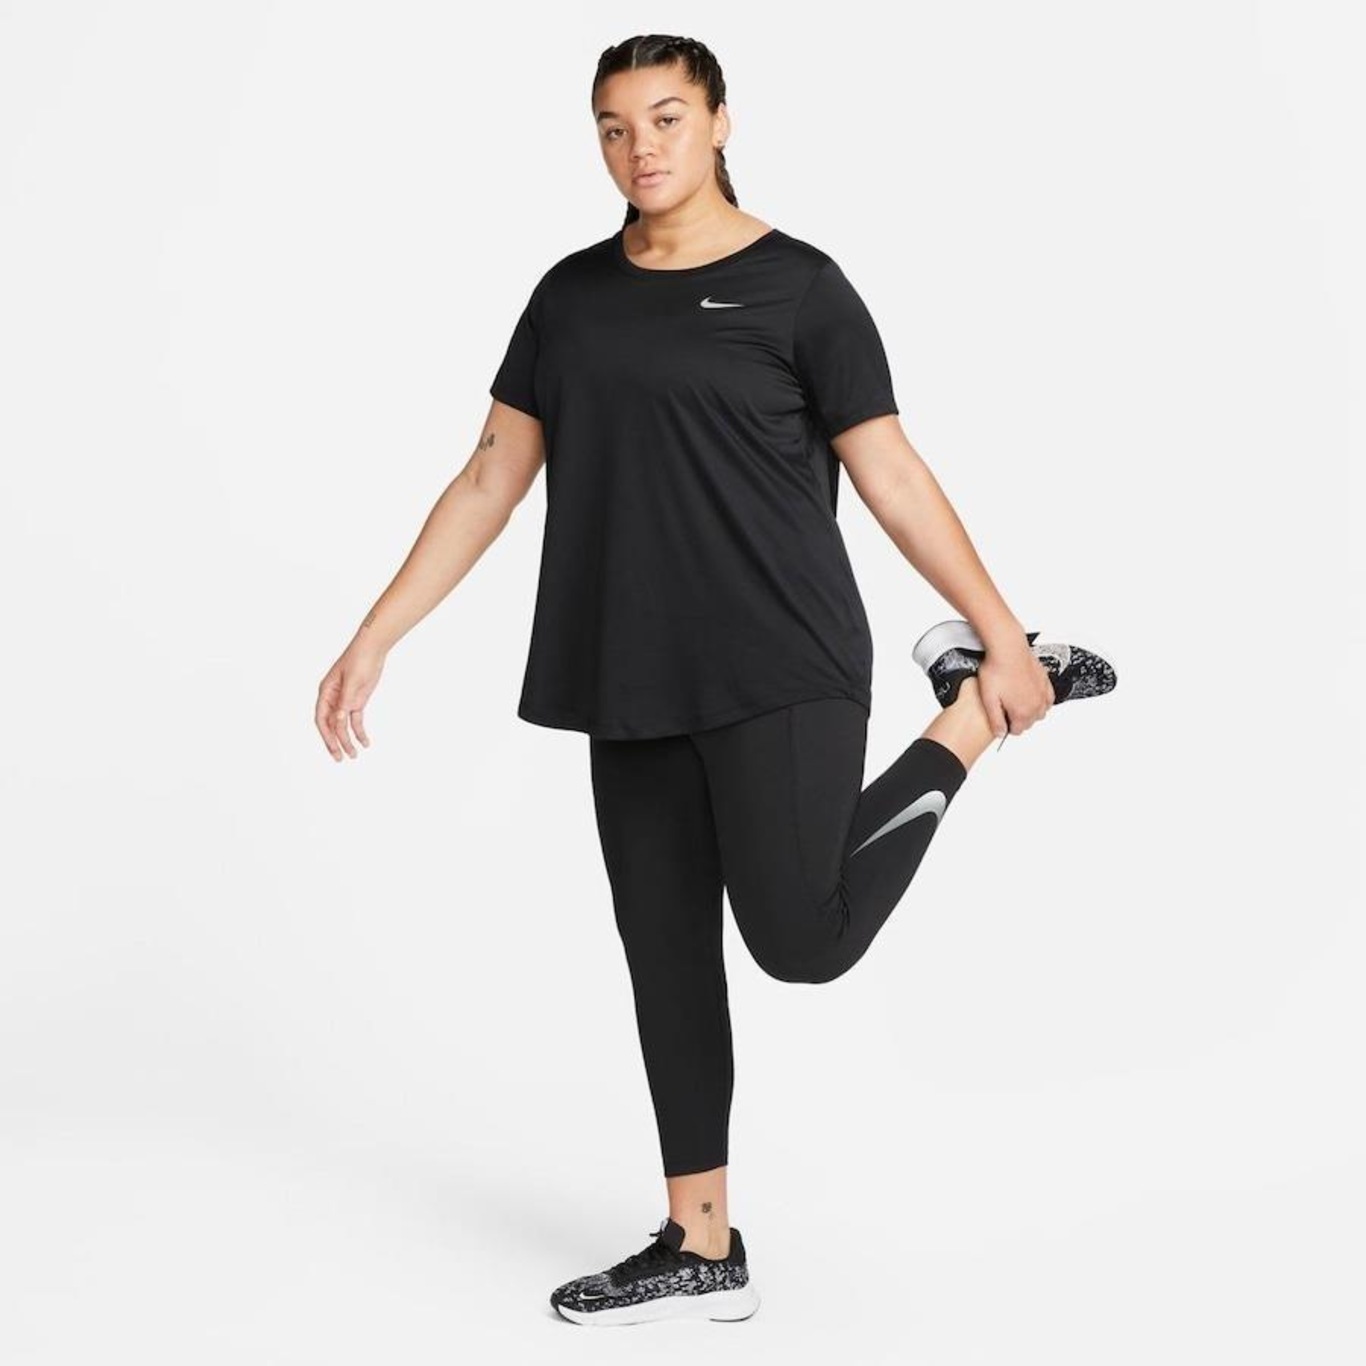 Calça Legging Nike Dri-FIT Fast Swoosh Plus Size - Feminina em Promoção